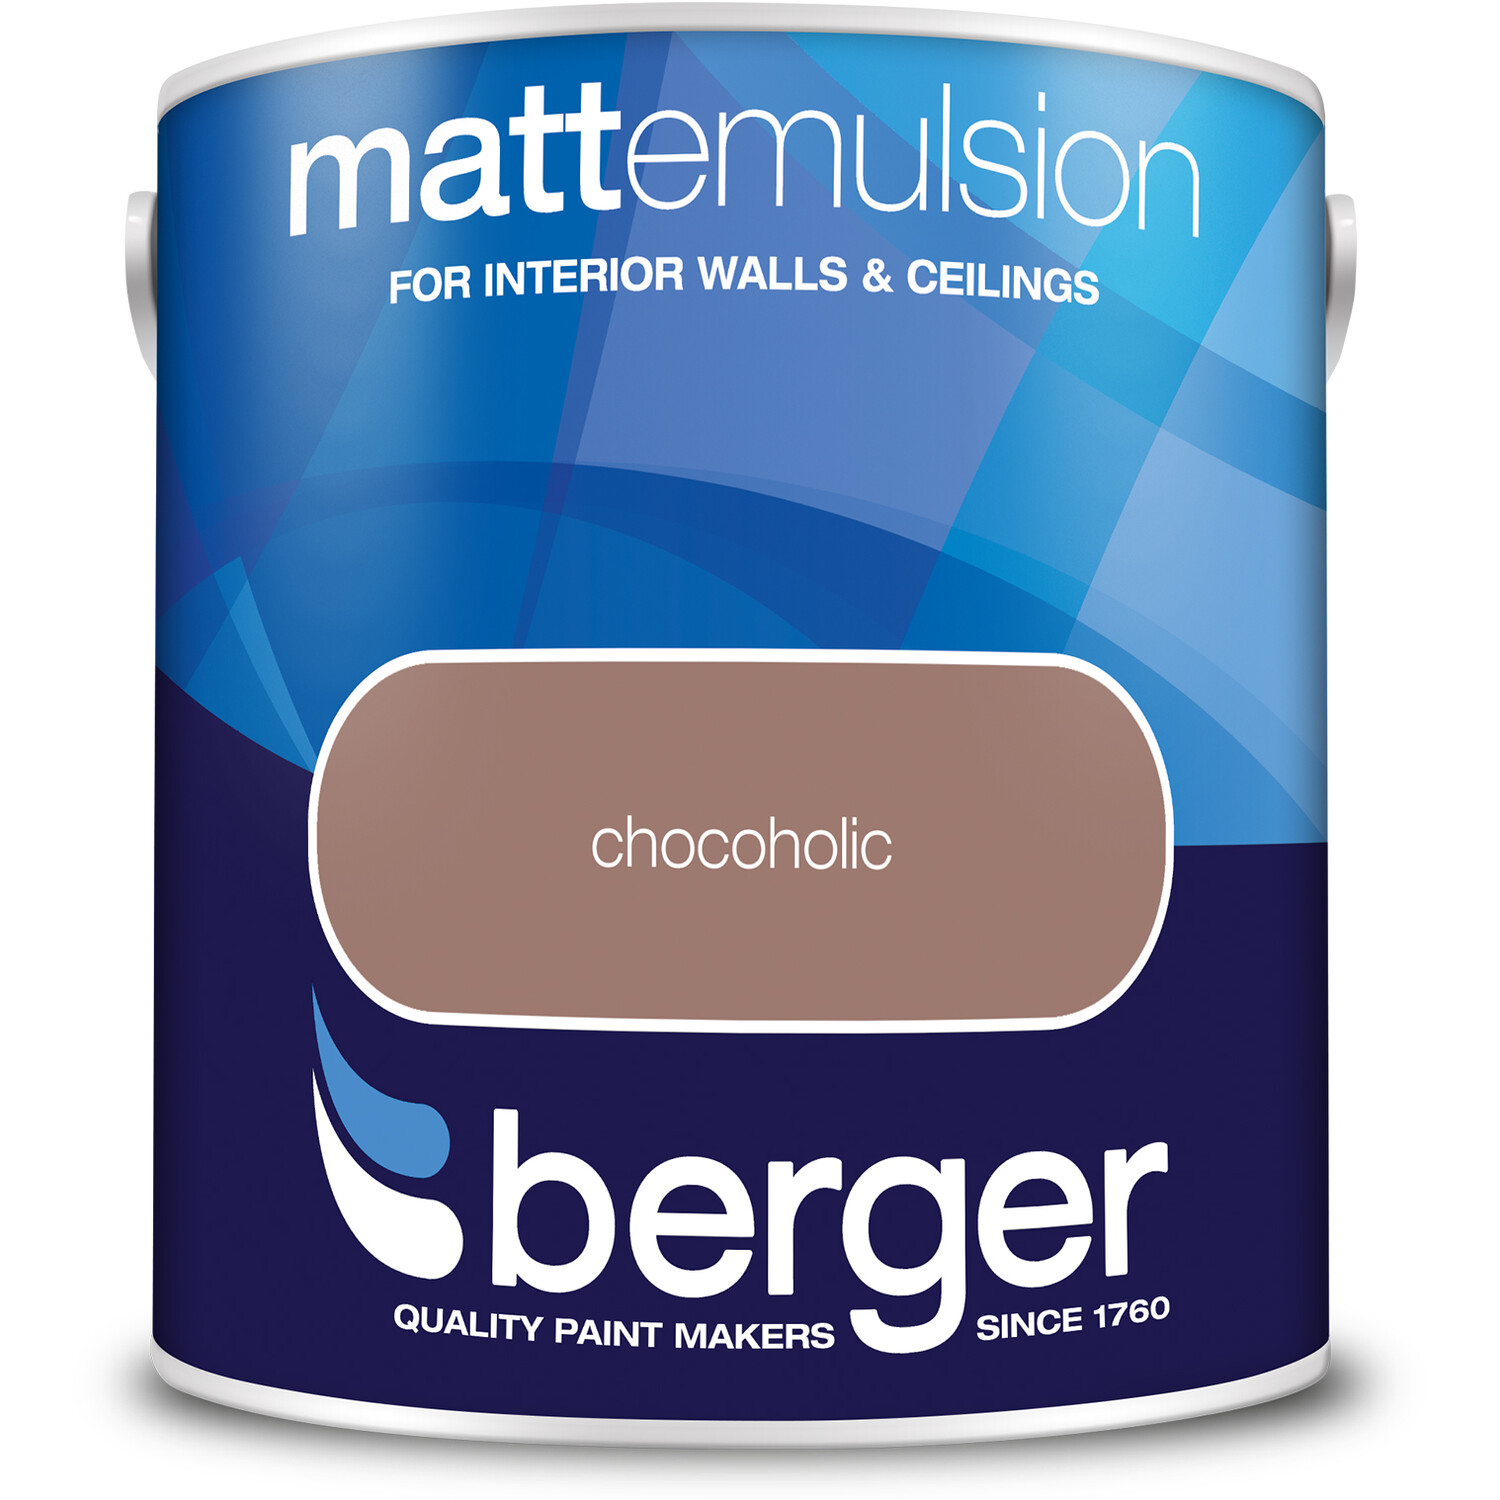 Berger Walls & Ceilings Chocoholic Matt Emulsion Paint 2.5L Image 2